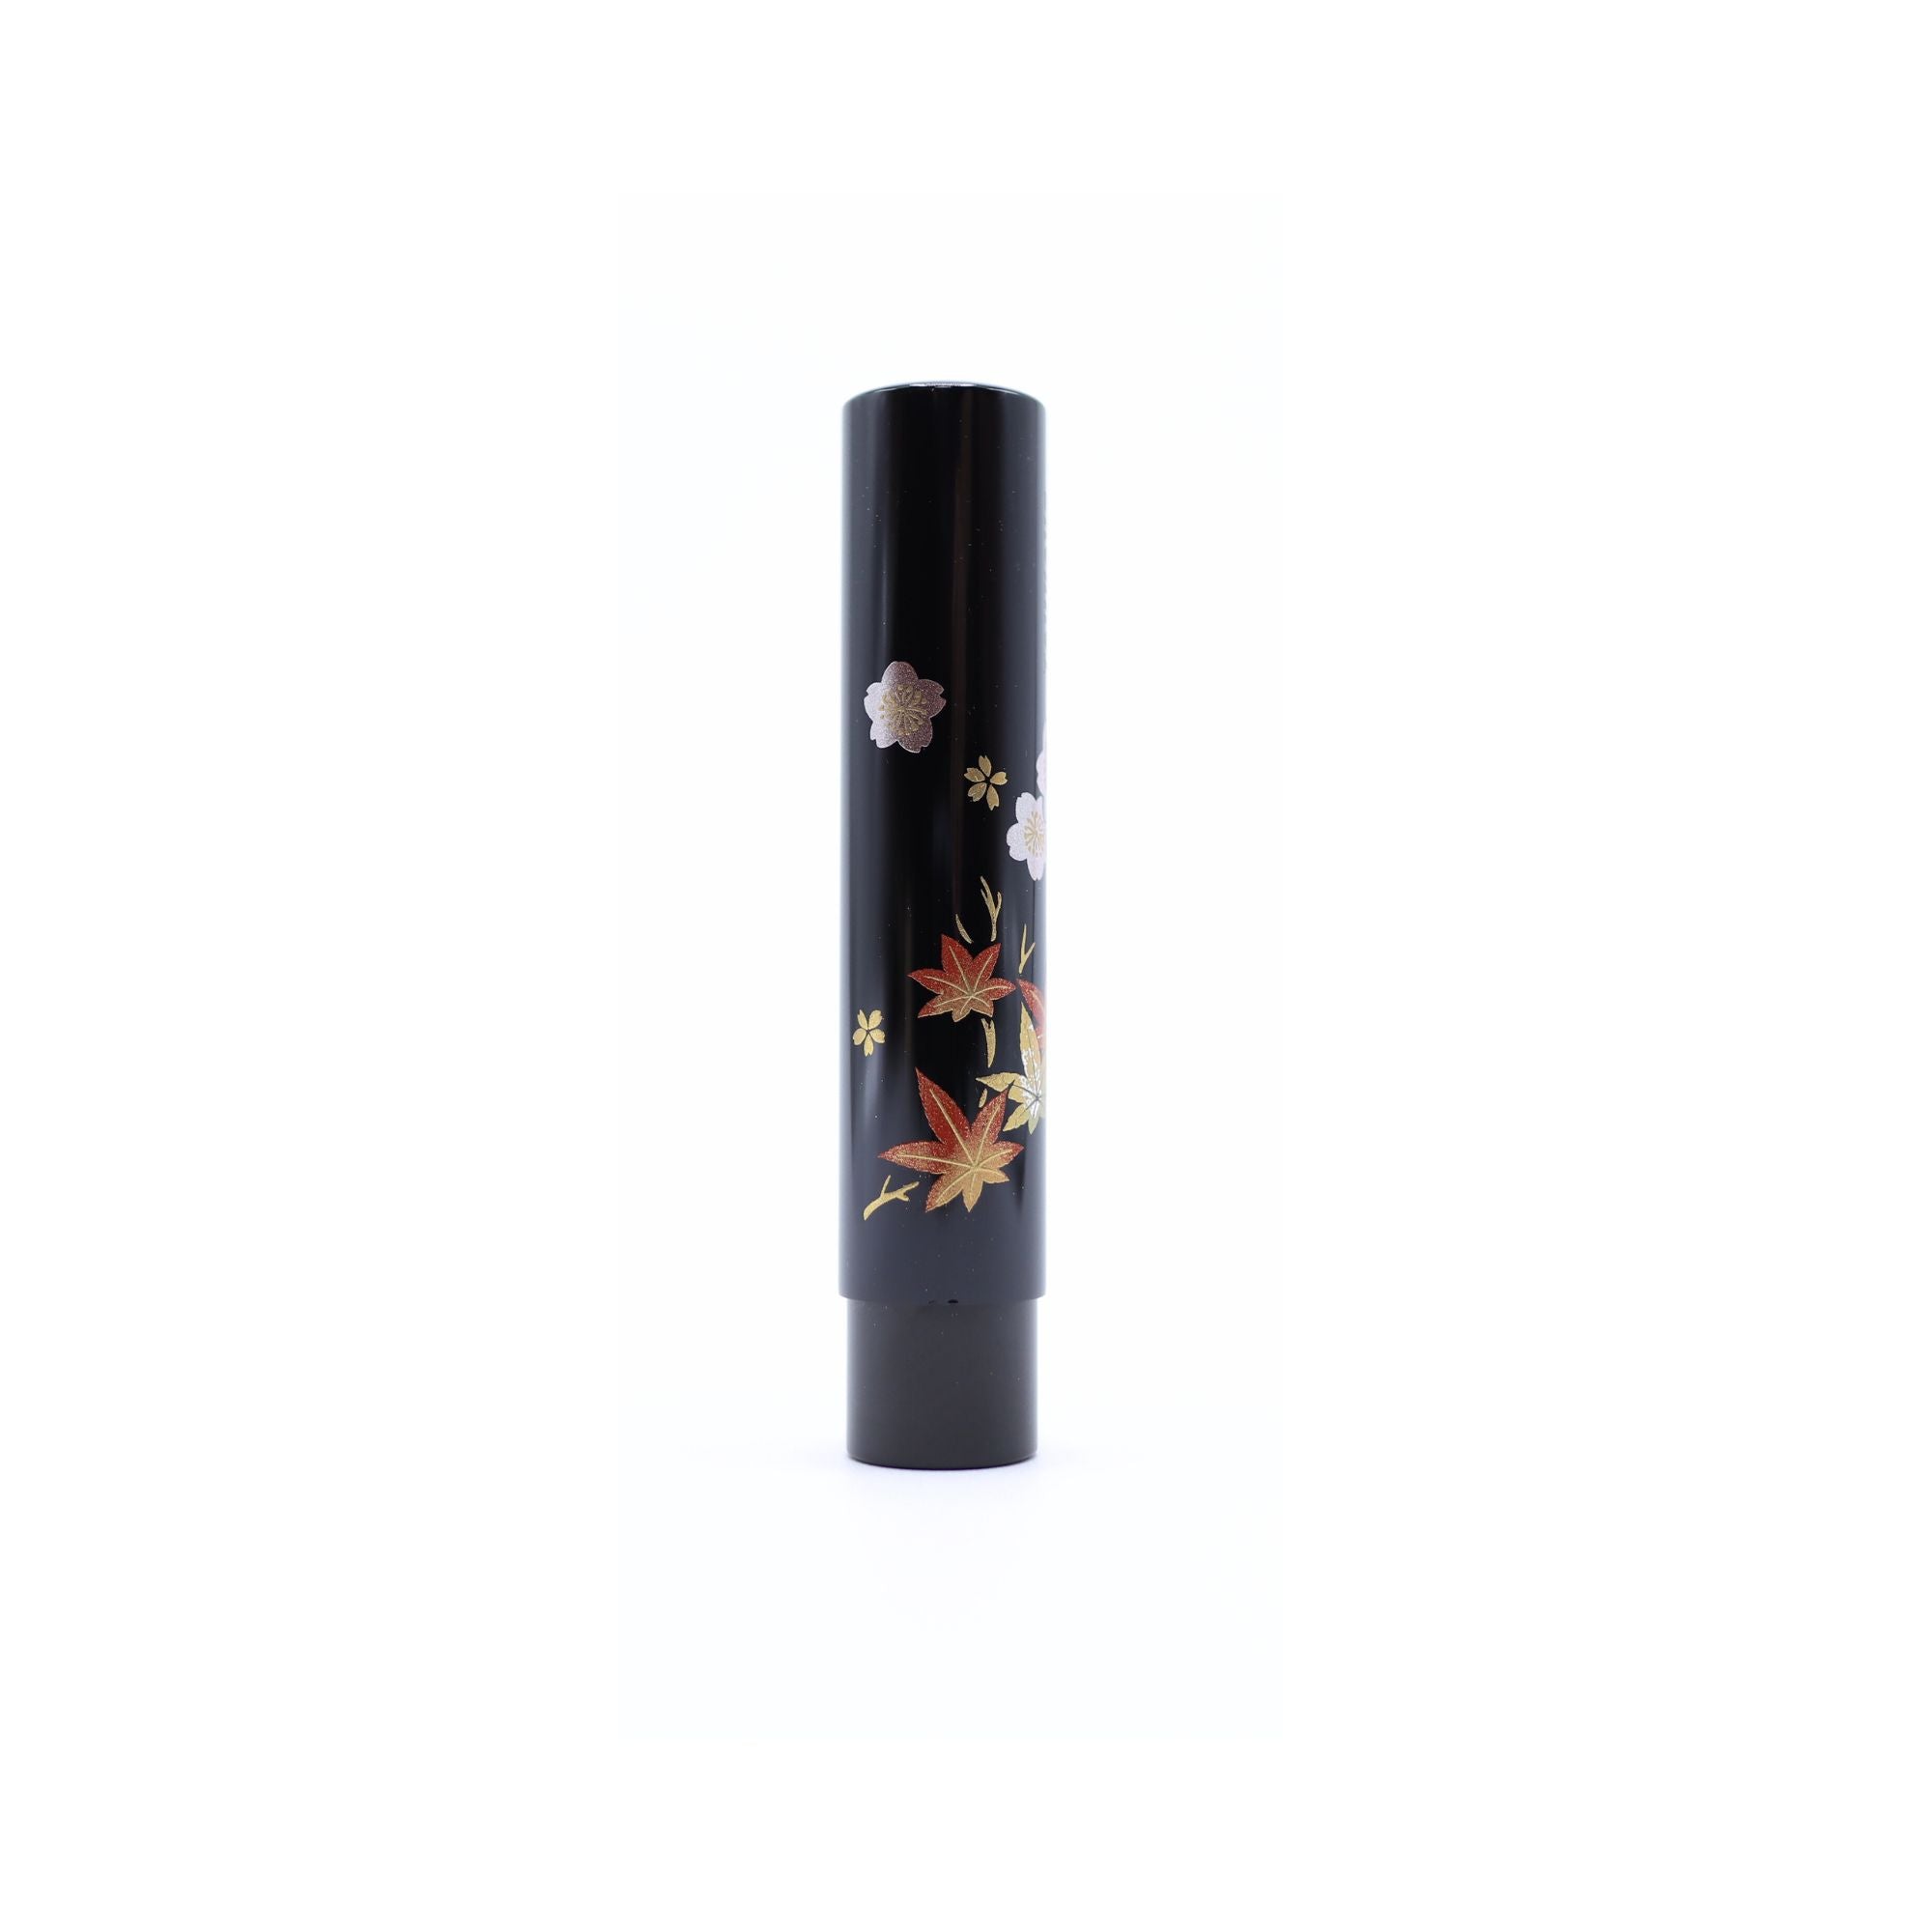 Tauhaus Sakura/Autumn Leaf O-21 Portable Brush, Makie Series - Fude Beauty, Japanese Makeup Brushes